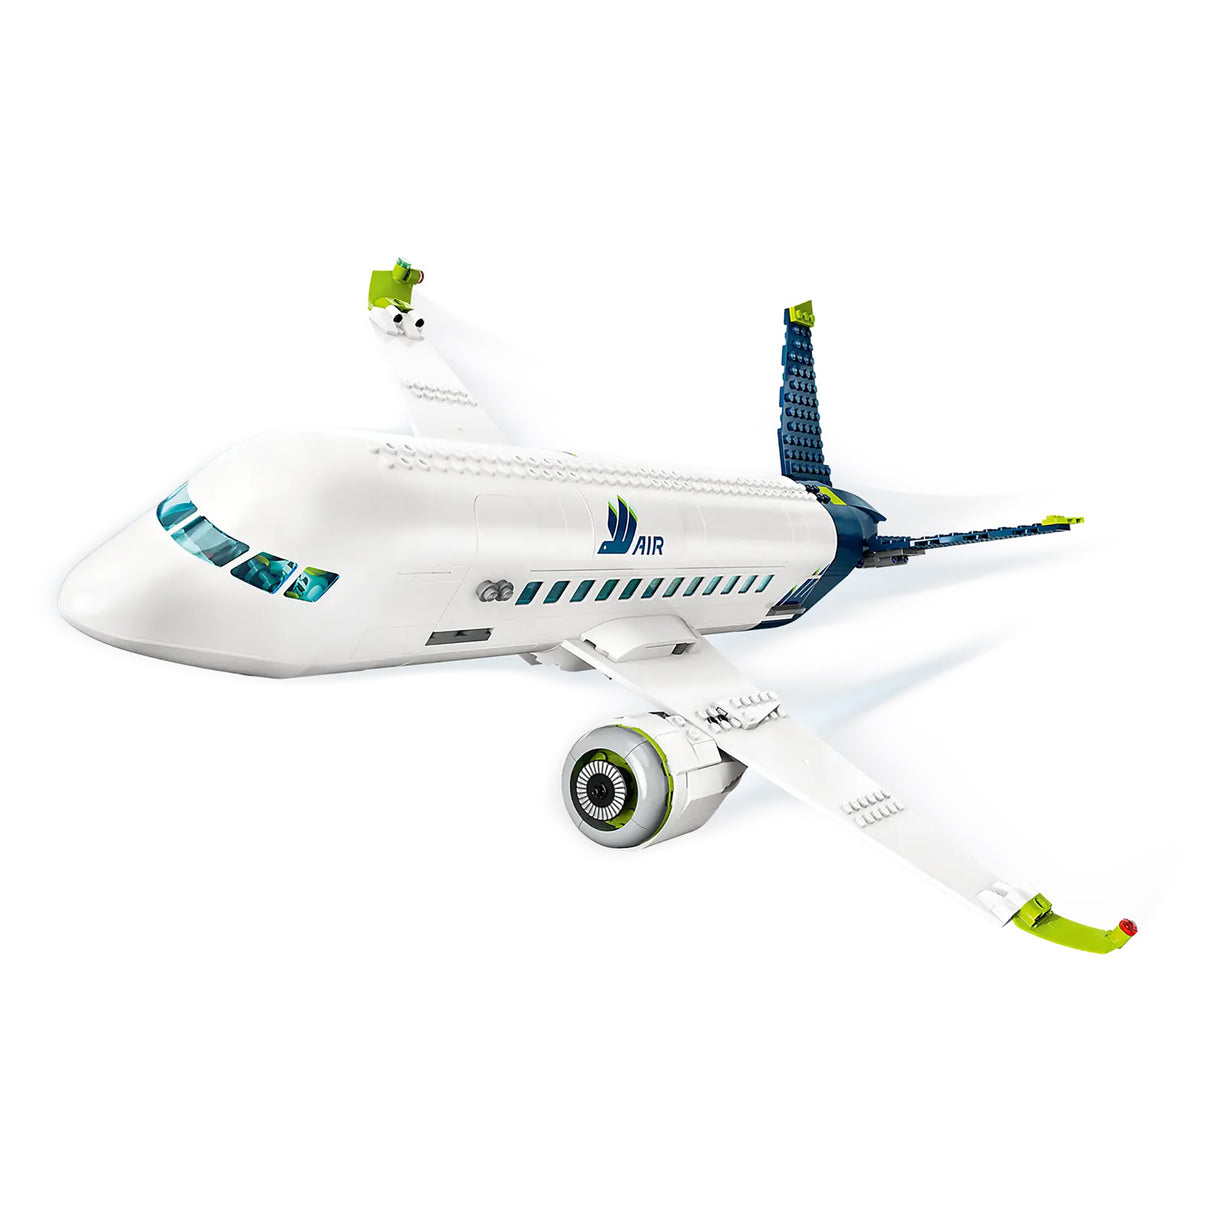 LEGO City Passenger Aeroplane 60367 (930 pieces)